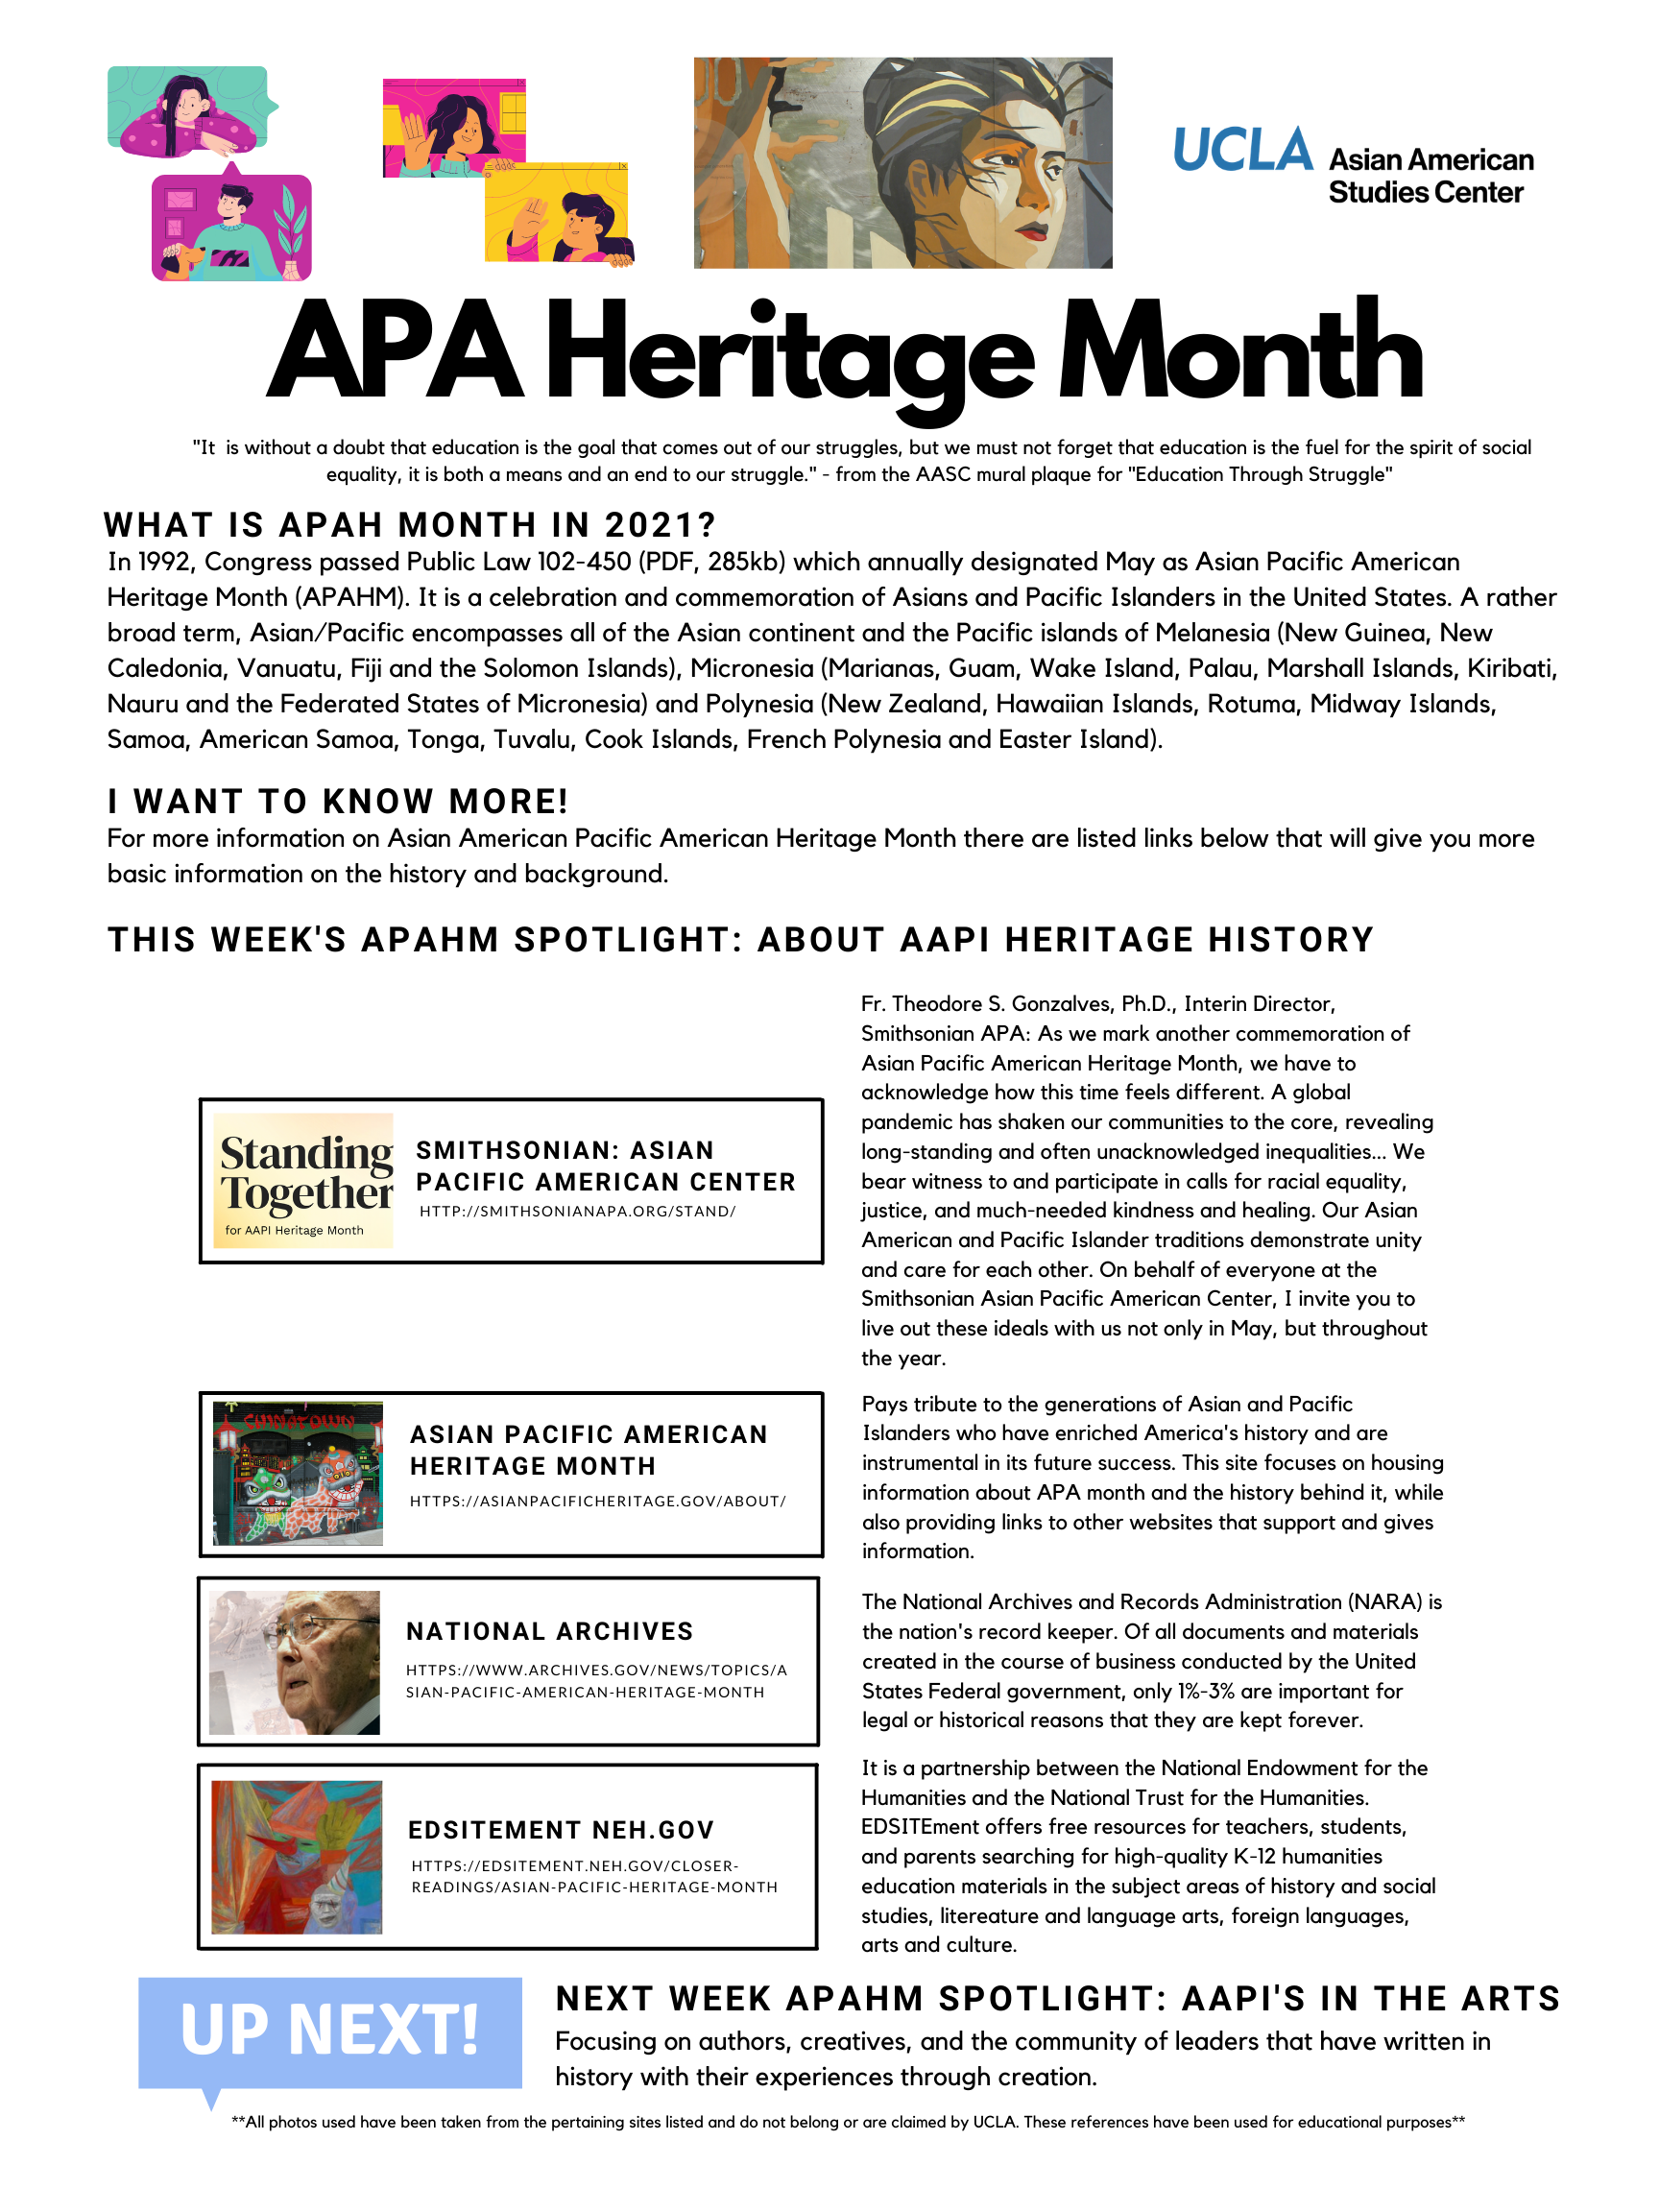 Week #1: APA Heritage Month